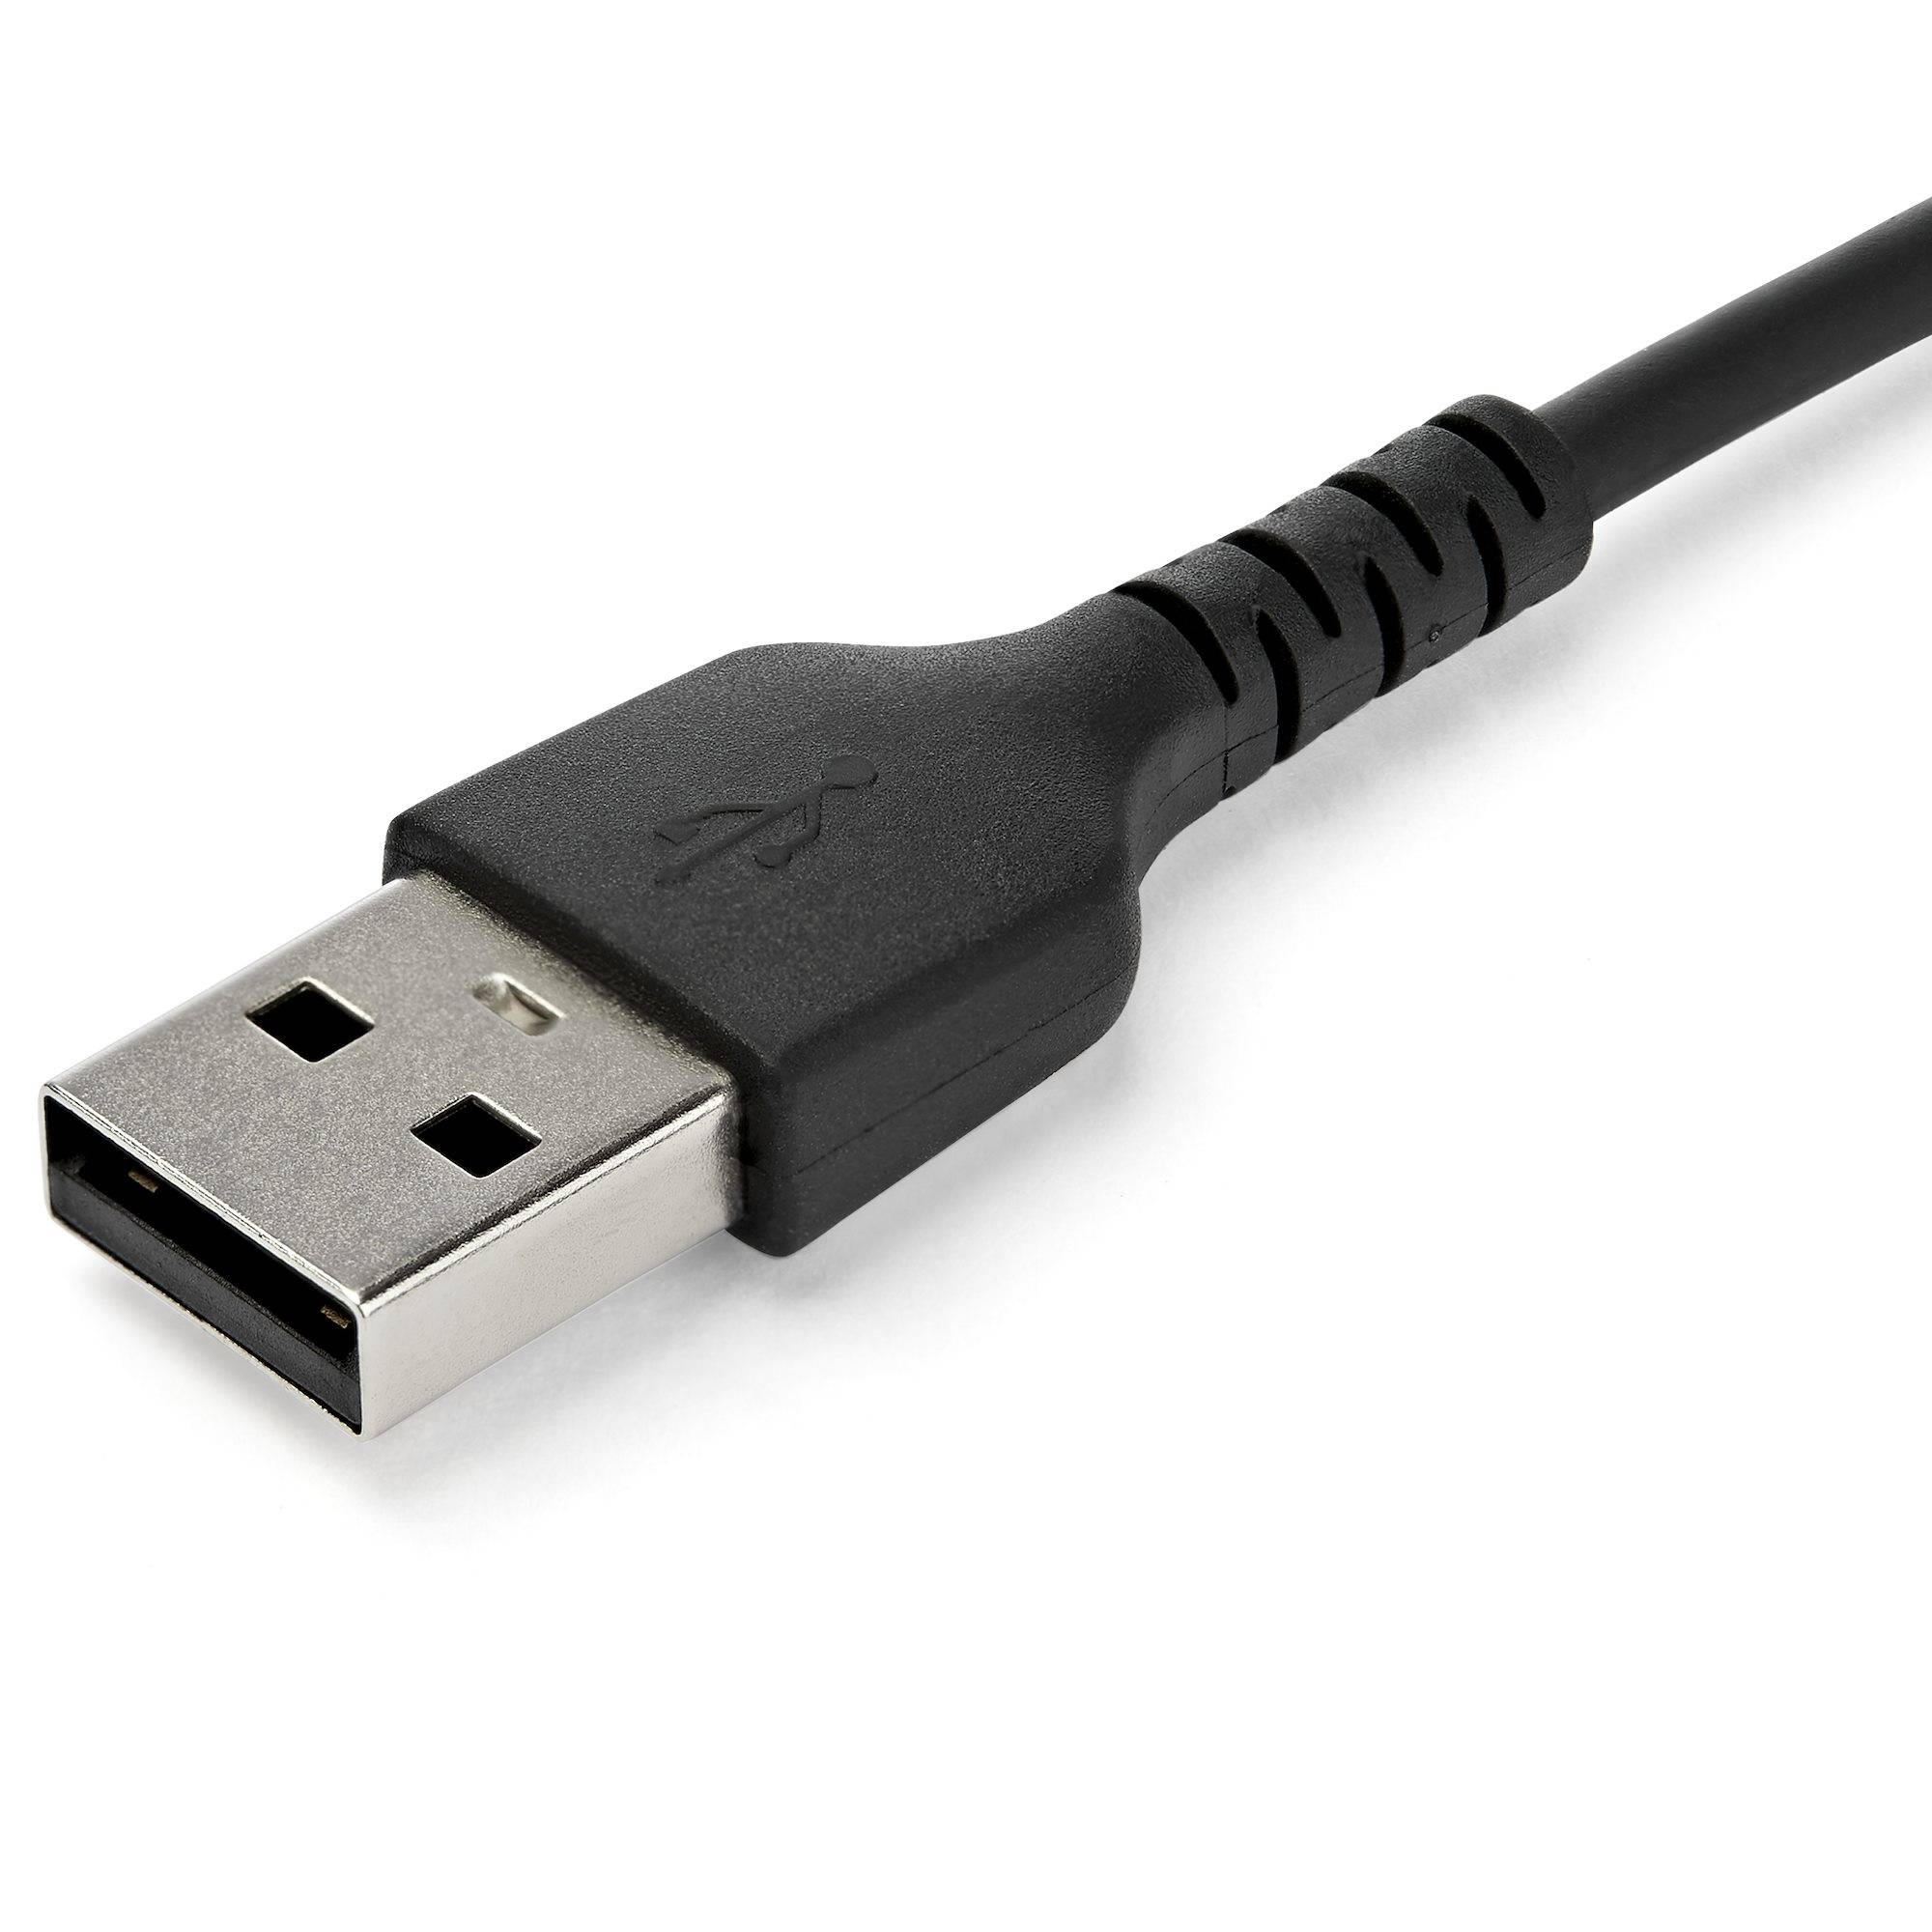 Rca Informatique - image du produit : 2M DURABLE USB 2.0 TO USB C CABLE BLACK ARAMID FIBER